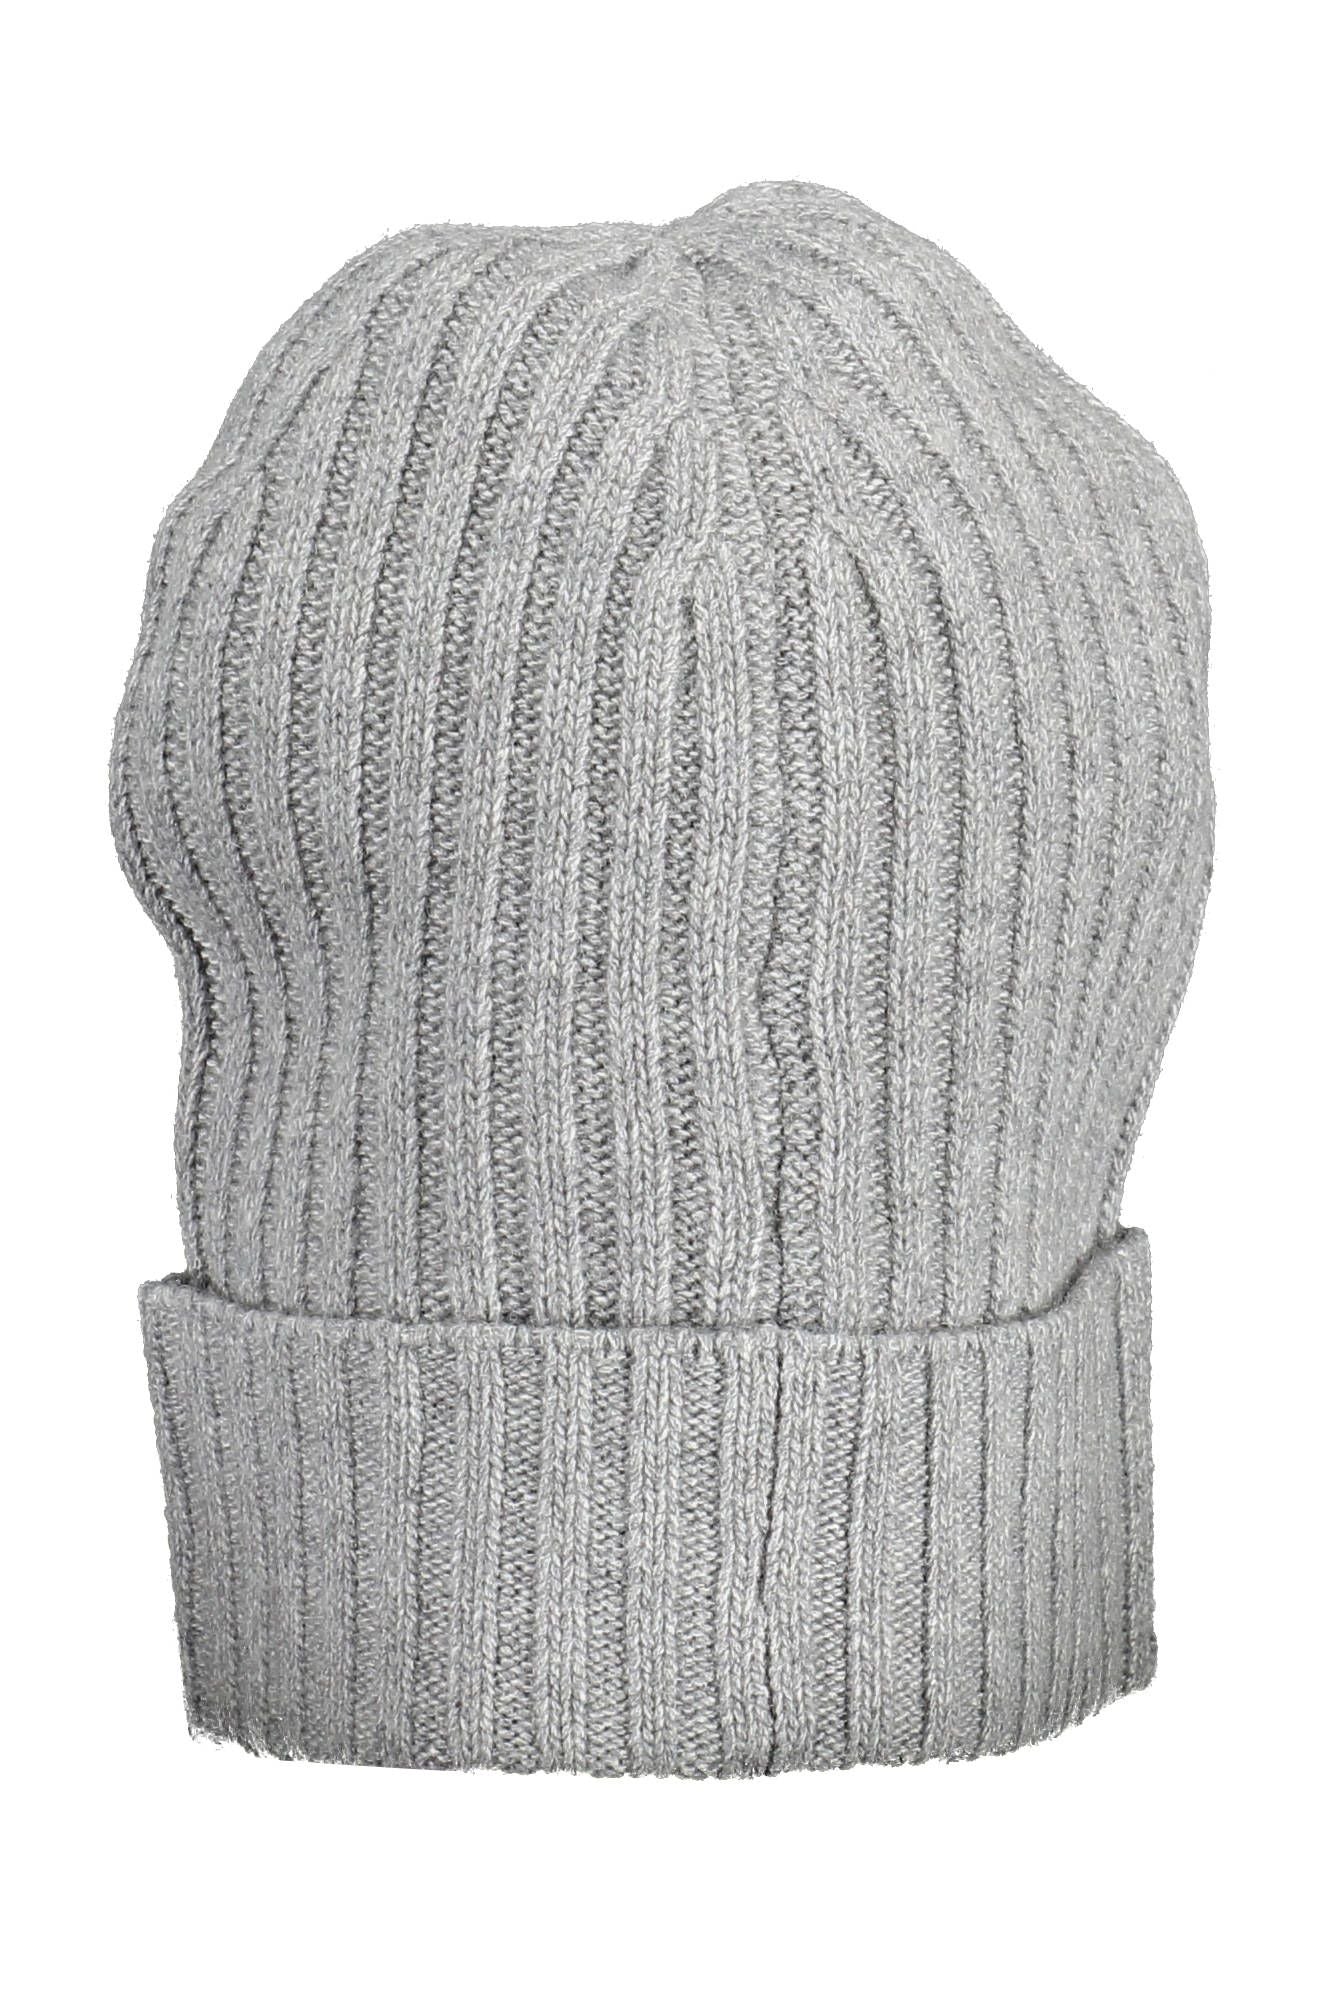 Elegant Wool Embroidered Cap